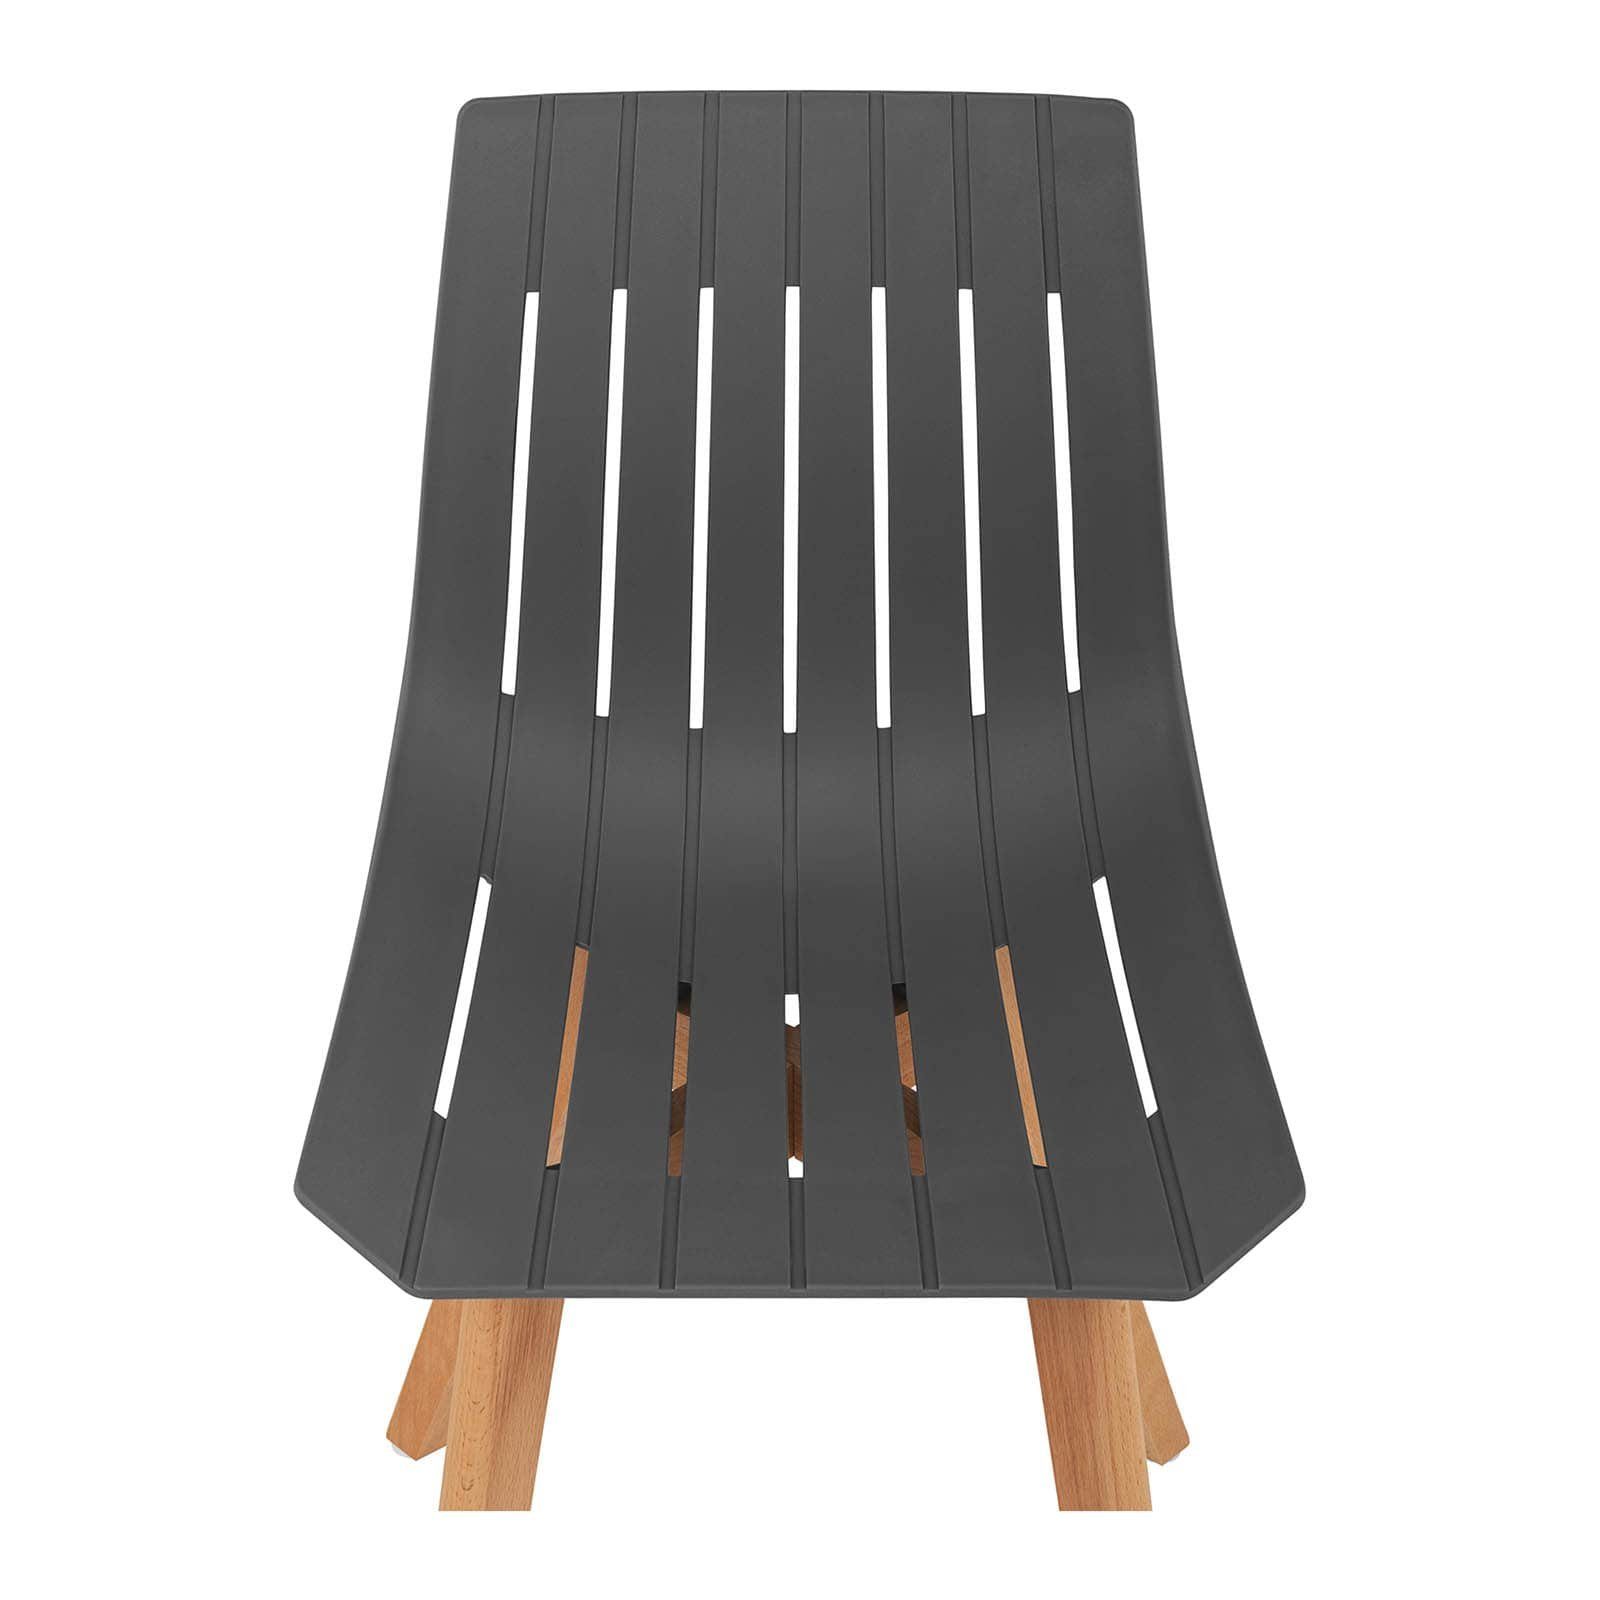 Kunststoff Fromm&Starck Holzbeine Set Stuhl 150 Lehnstuhl kg Esszimmerstuhl Buche 2er grau bis